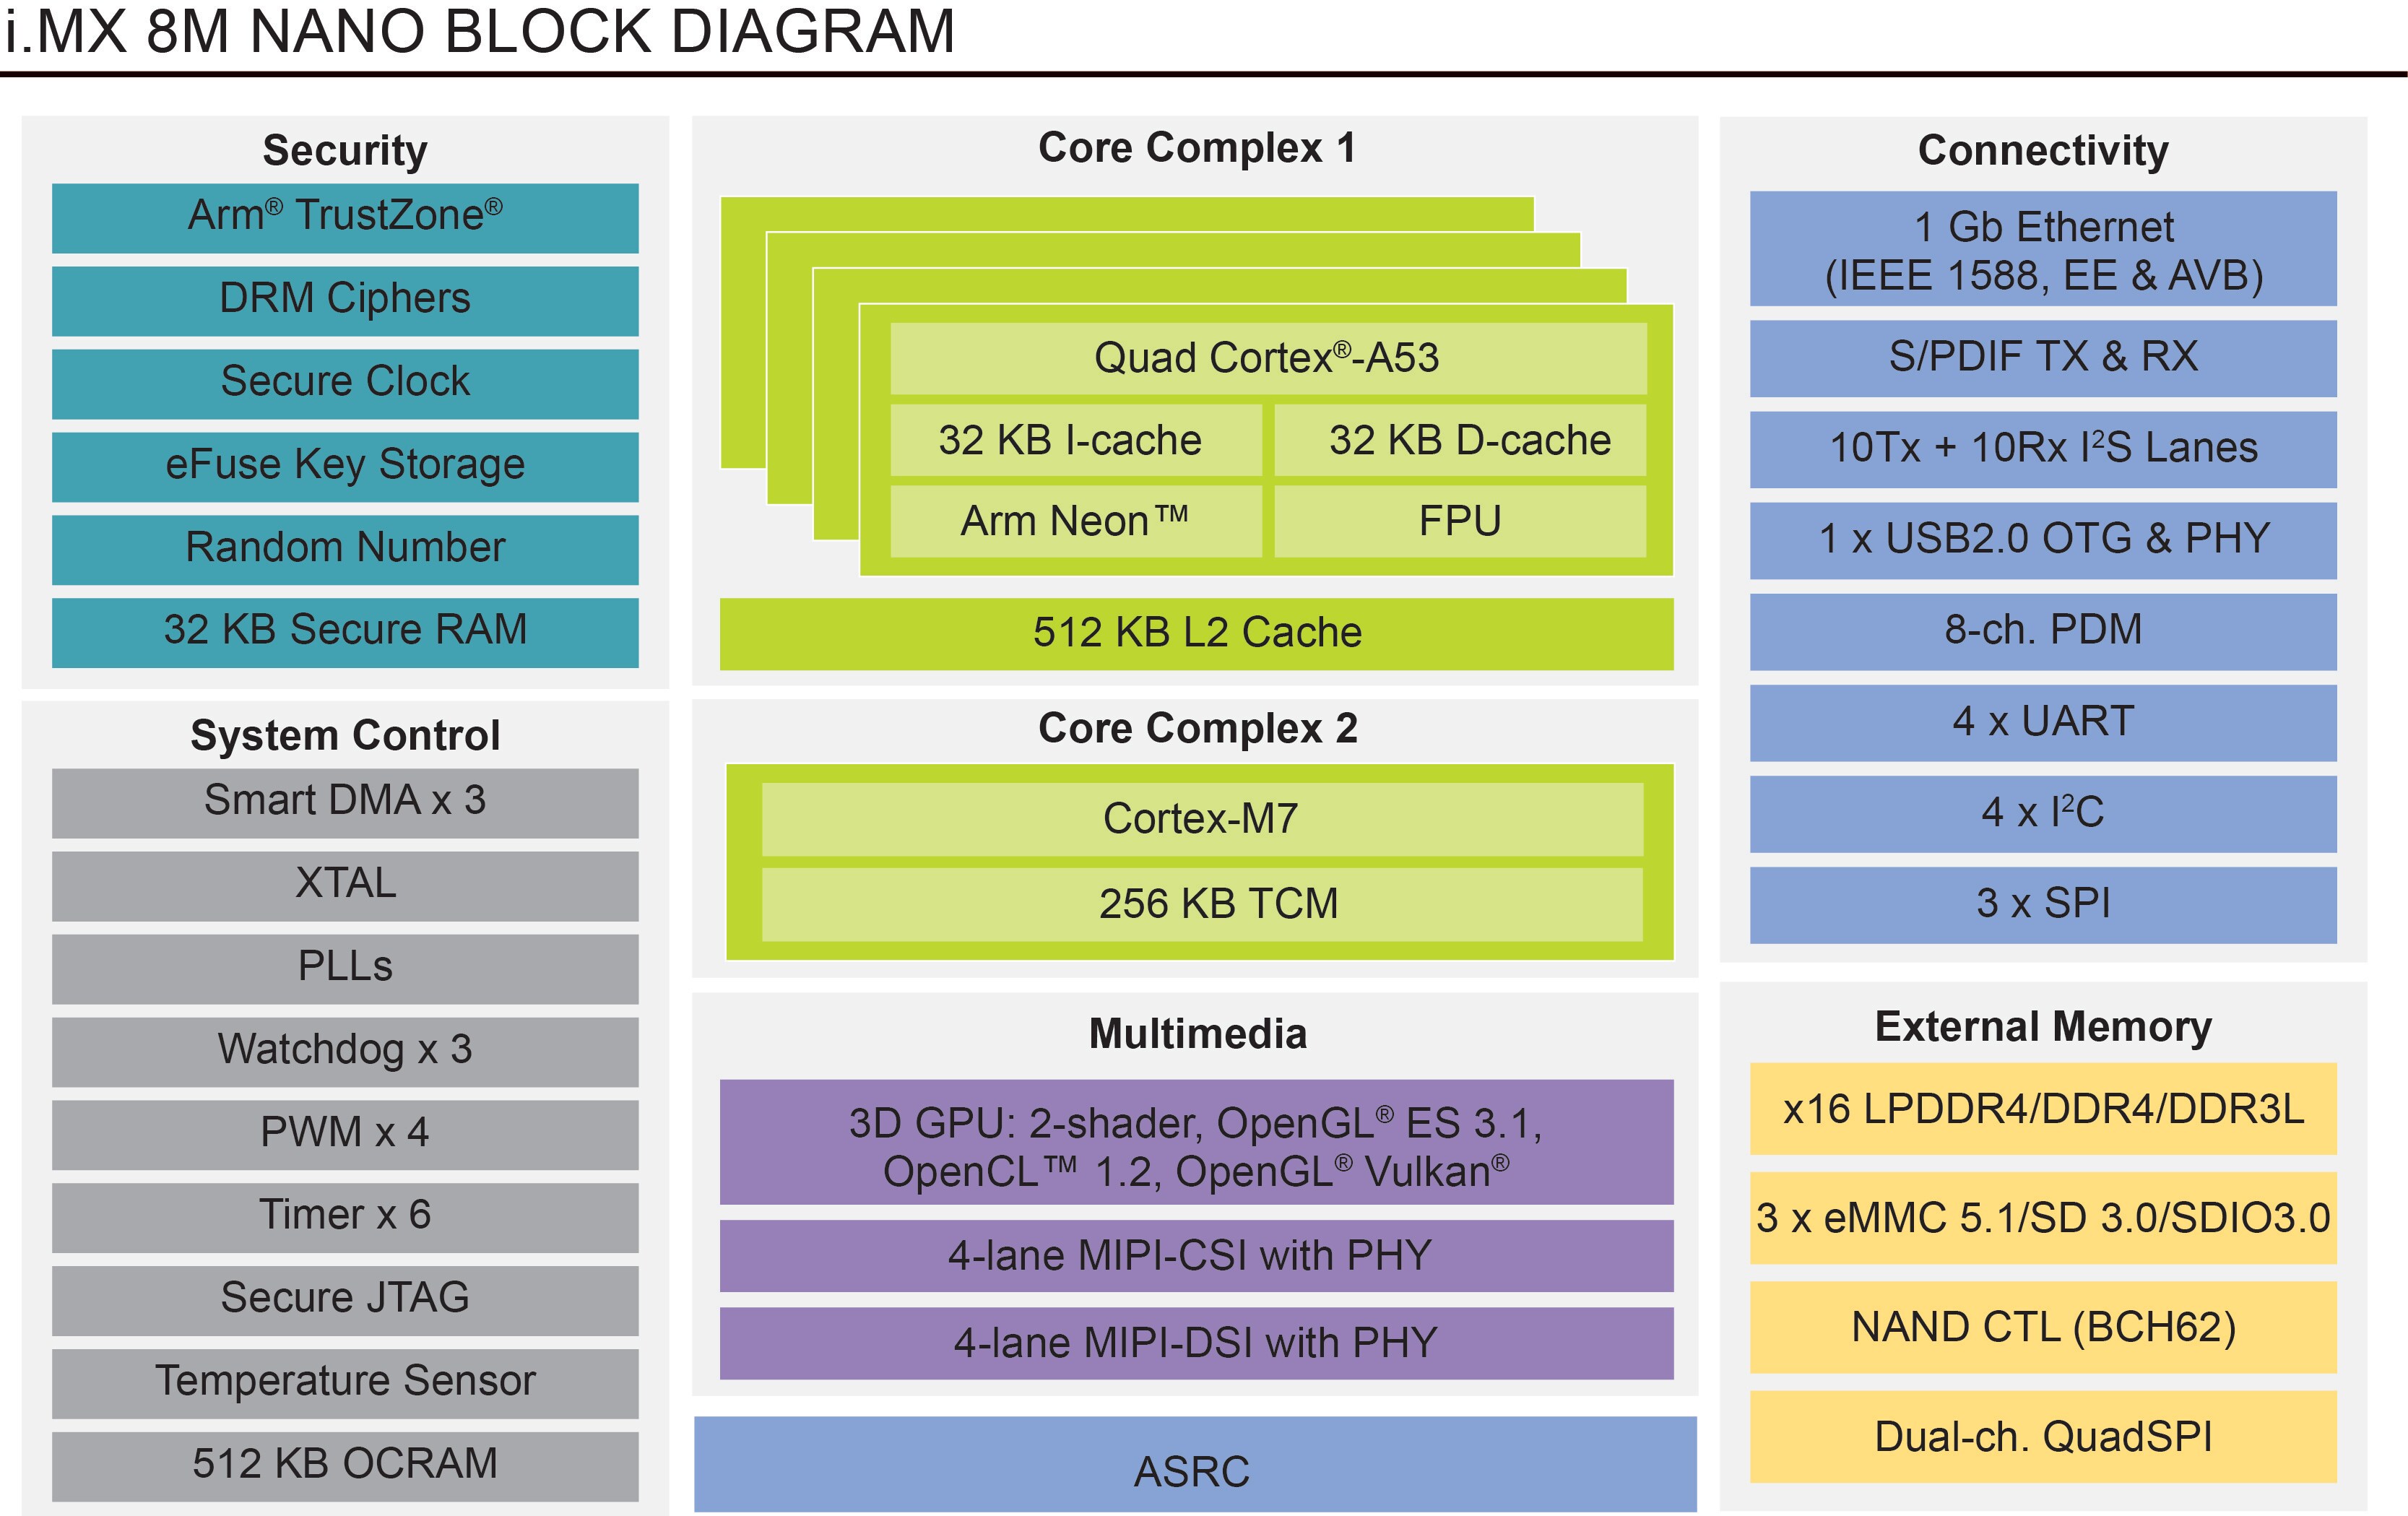 i.MX 8M Nano Block Diagram